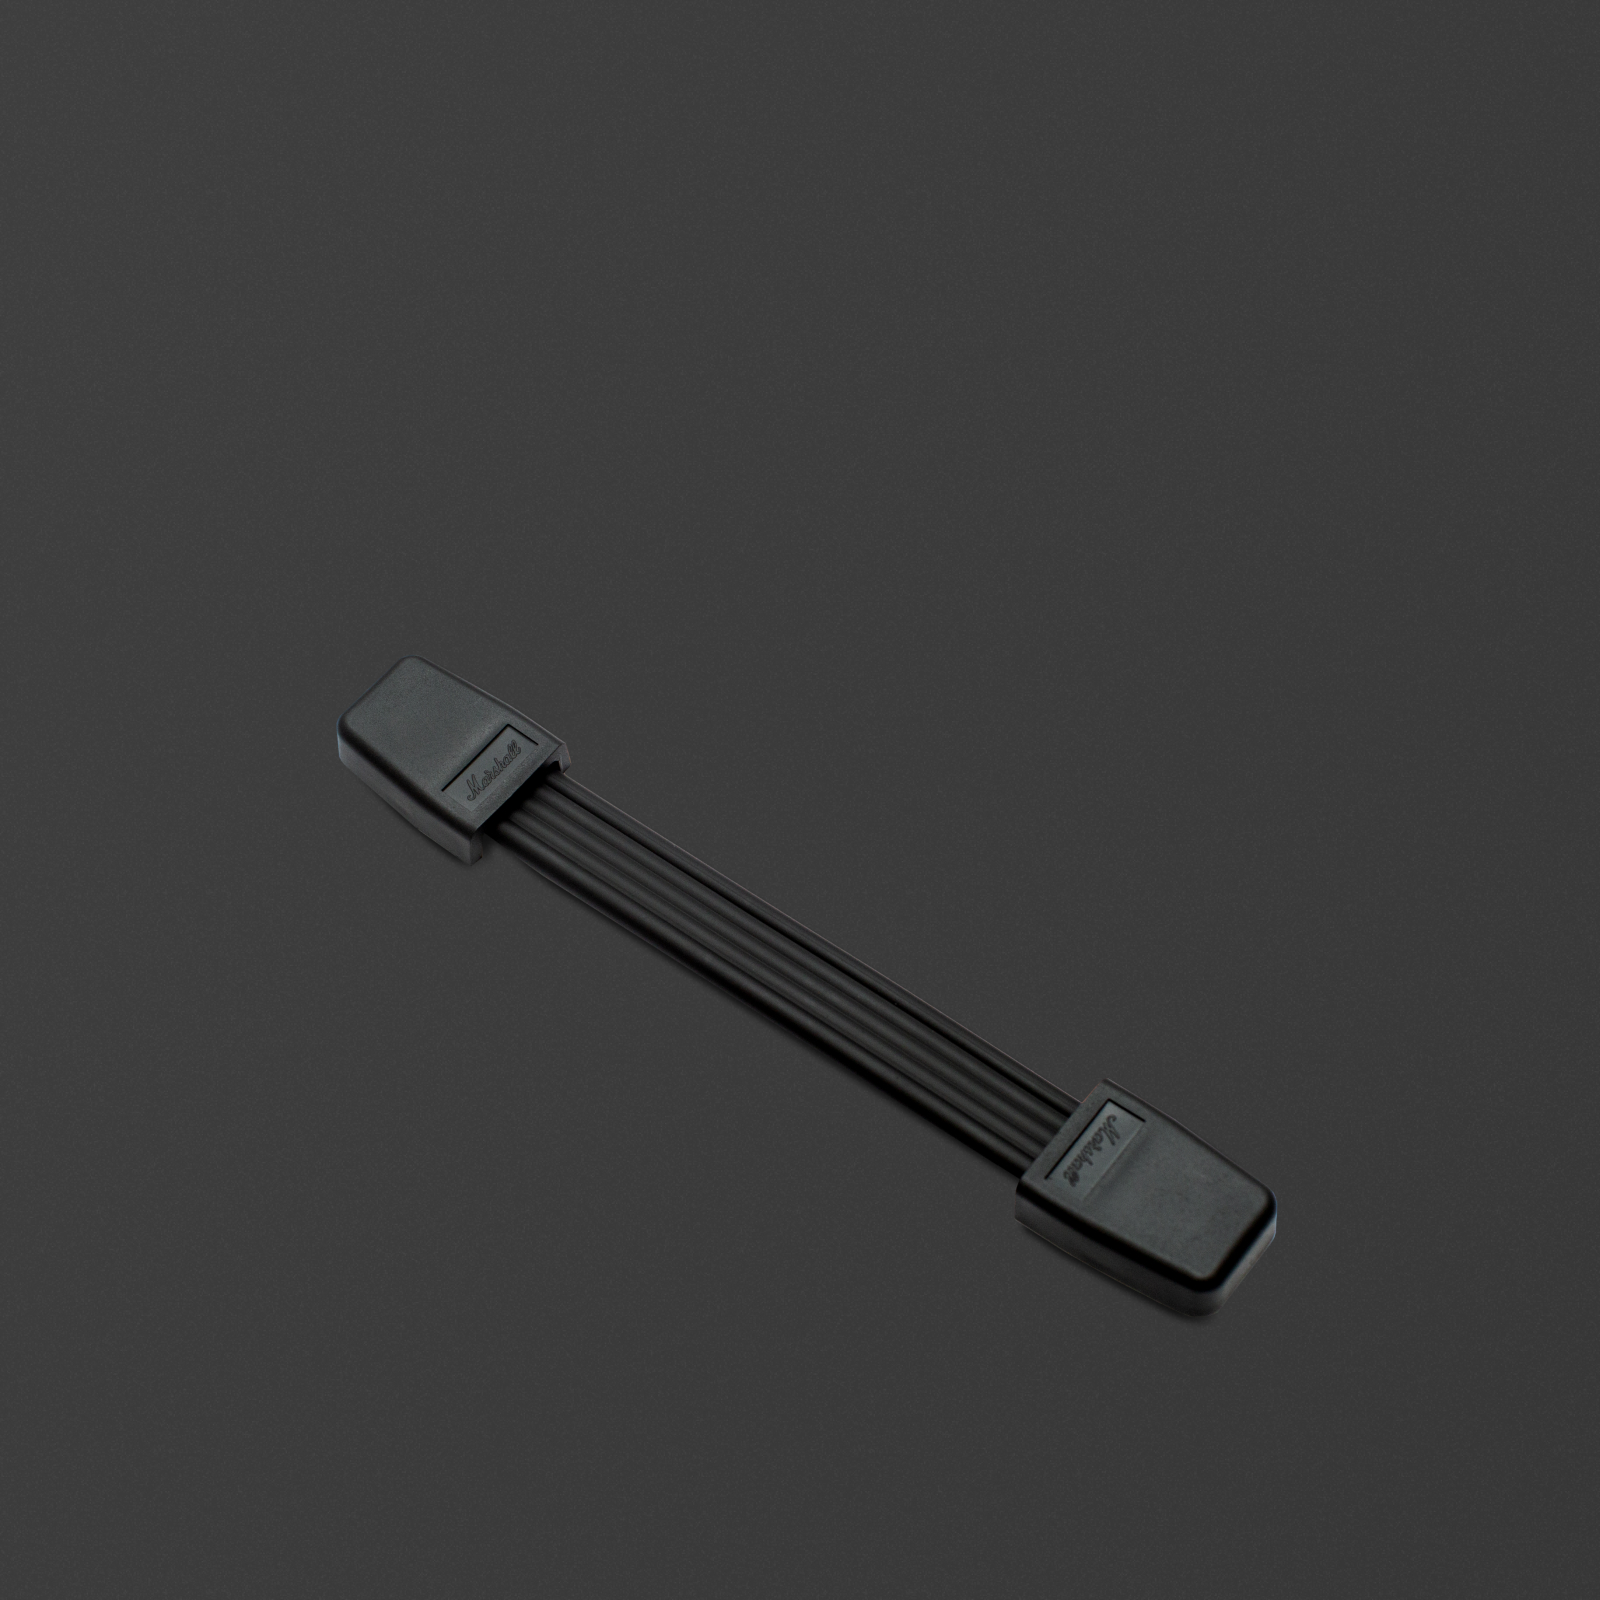 Black rubber strap handle.